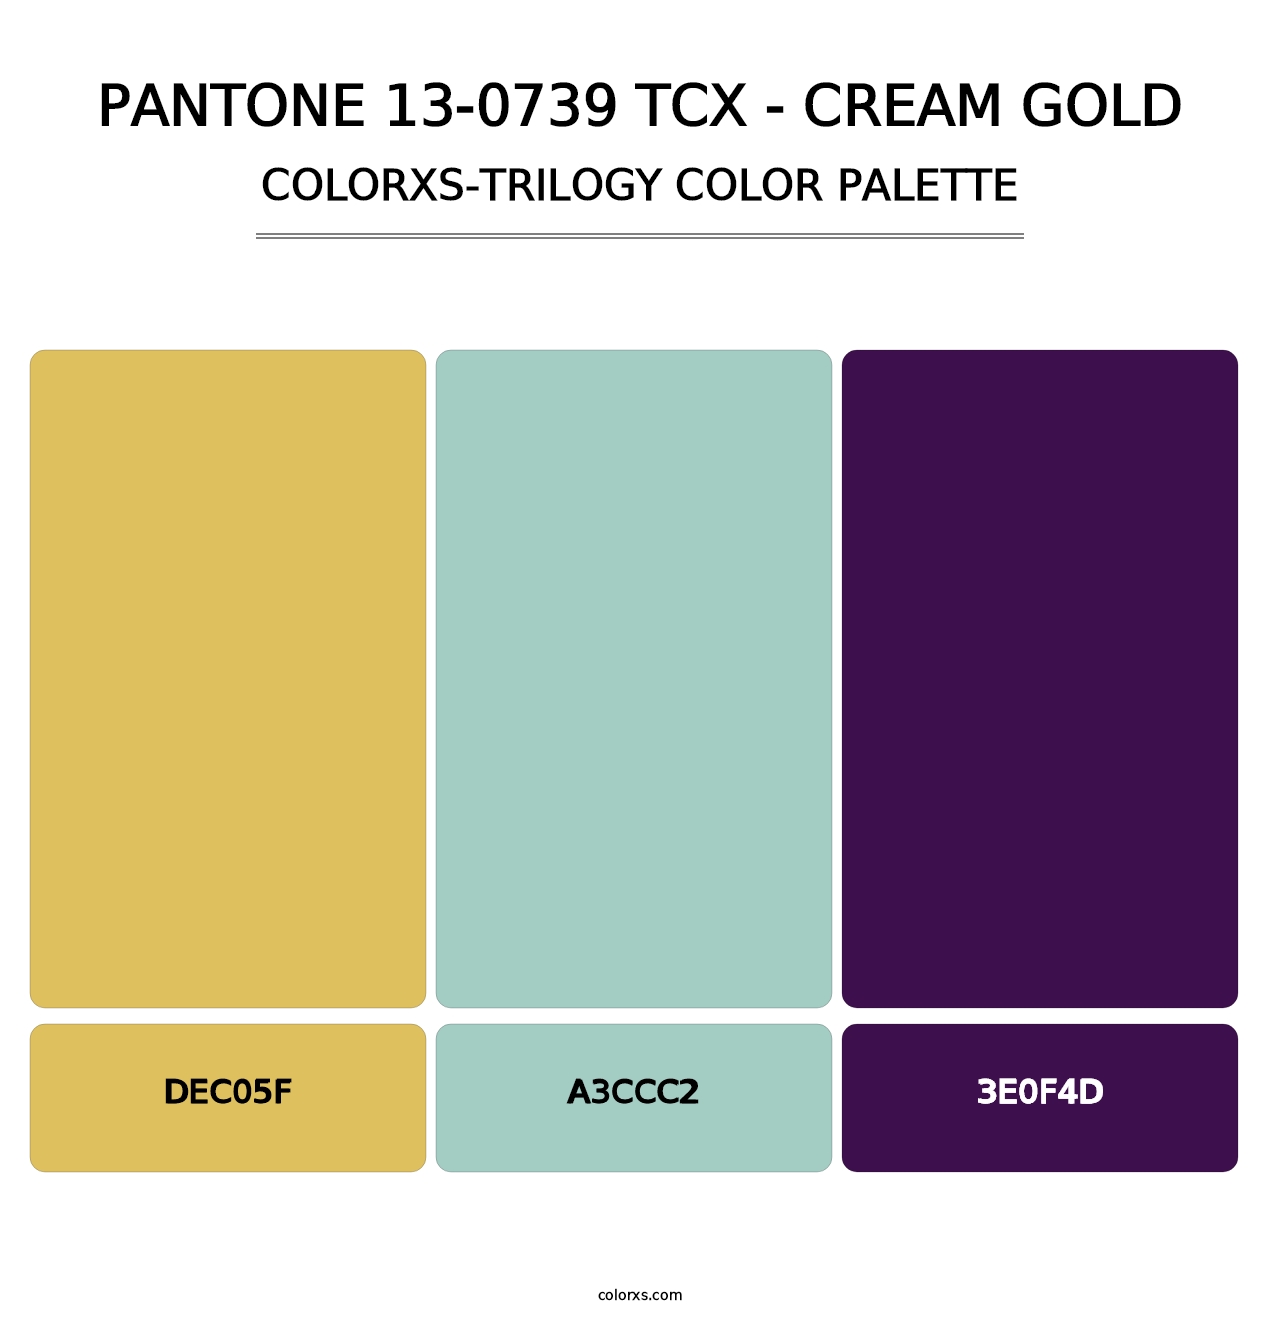 PANTONE 13-0739 TCX - Cream Gold - Colorxs Trilogy Palette